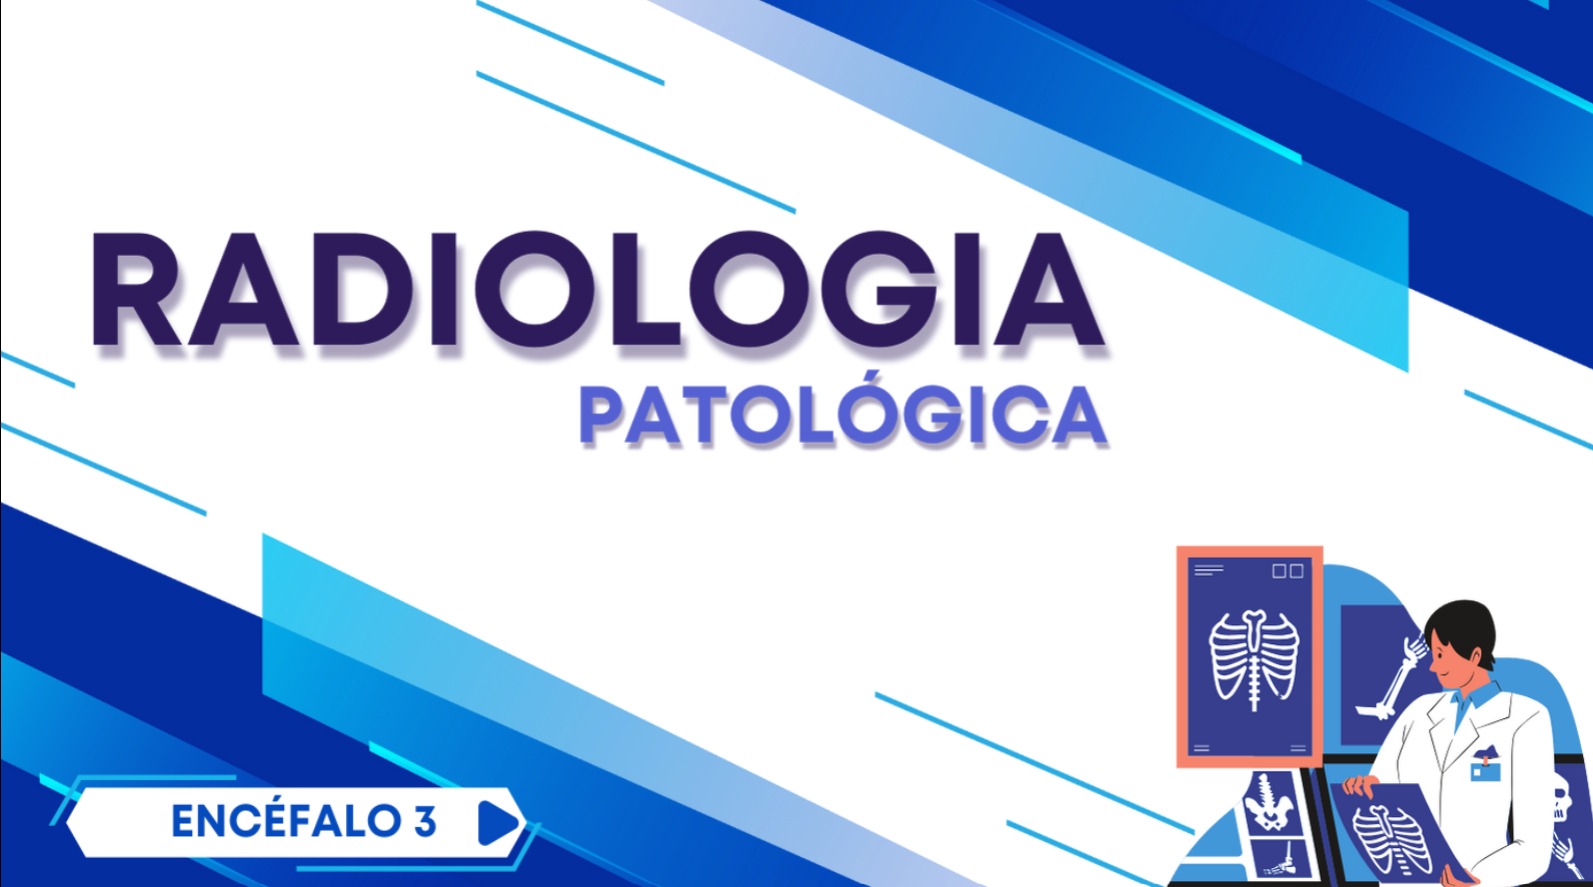 Radiologia Patológica - Encefalo 3